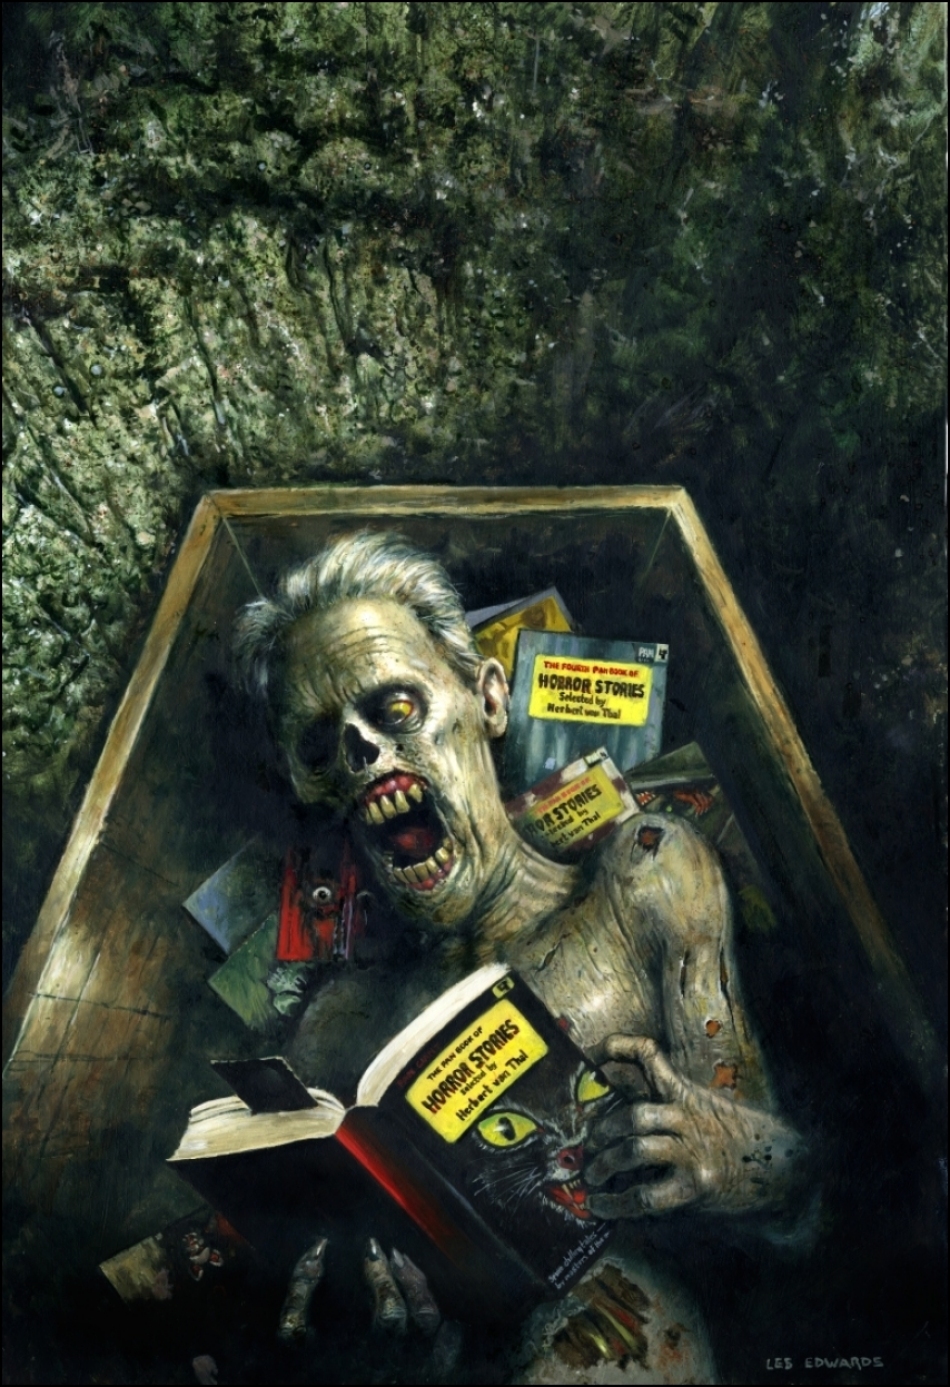 The PAN Scrapbook of Horror Stories